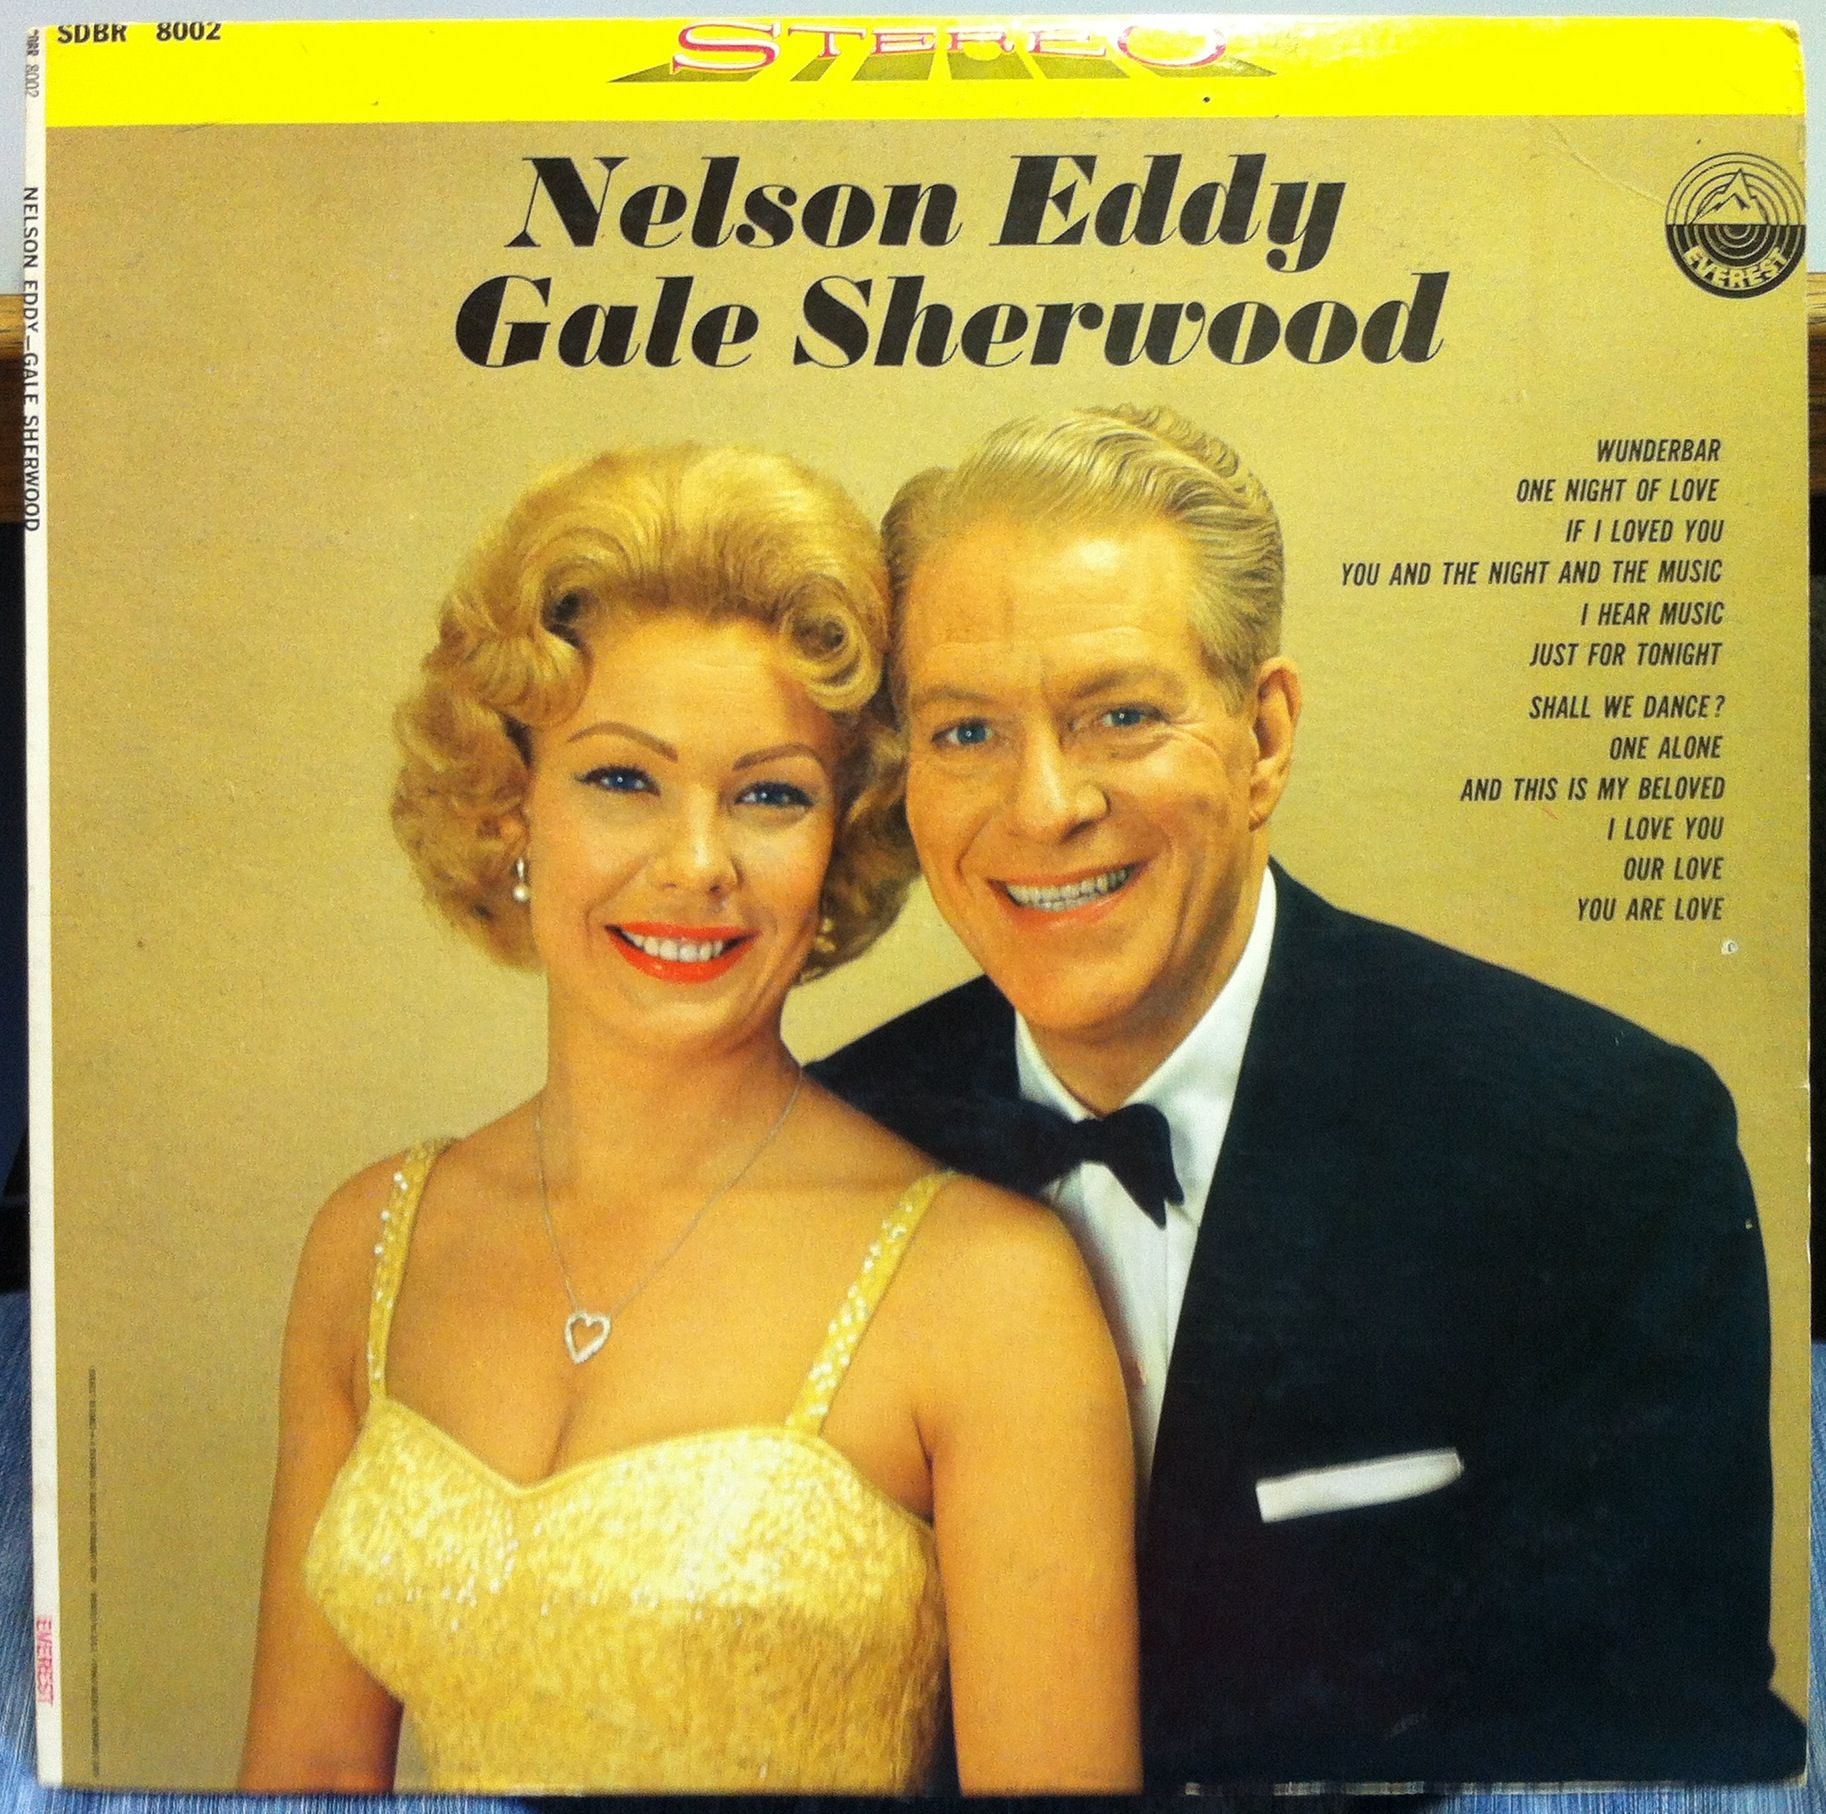 NELSON EDDY & GALE SHERWOOD s/t debut LP VG+ SDBR 8002 Belock Stereo